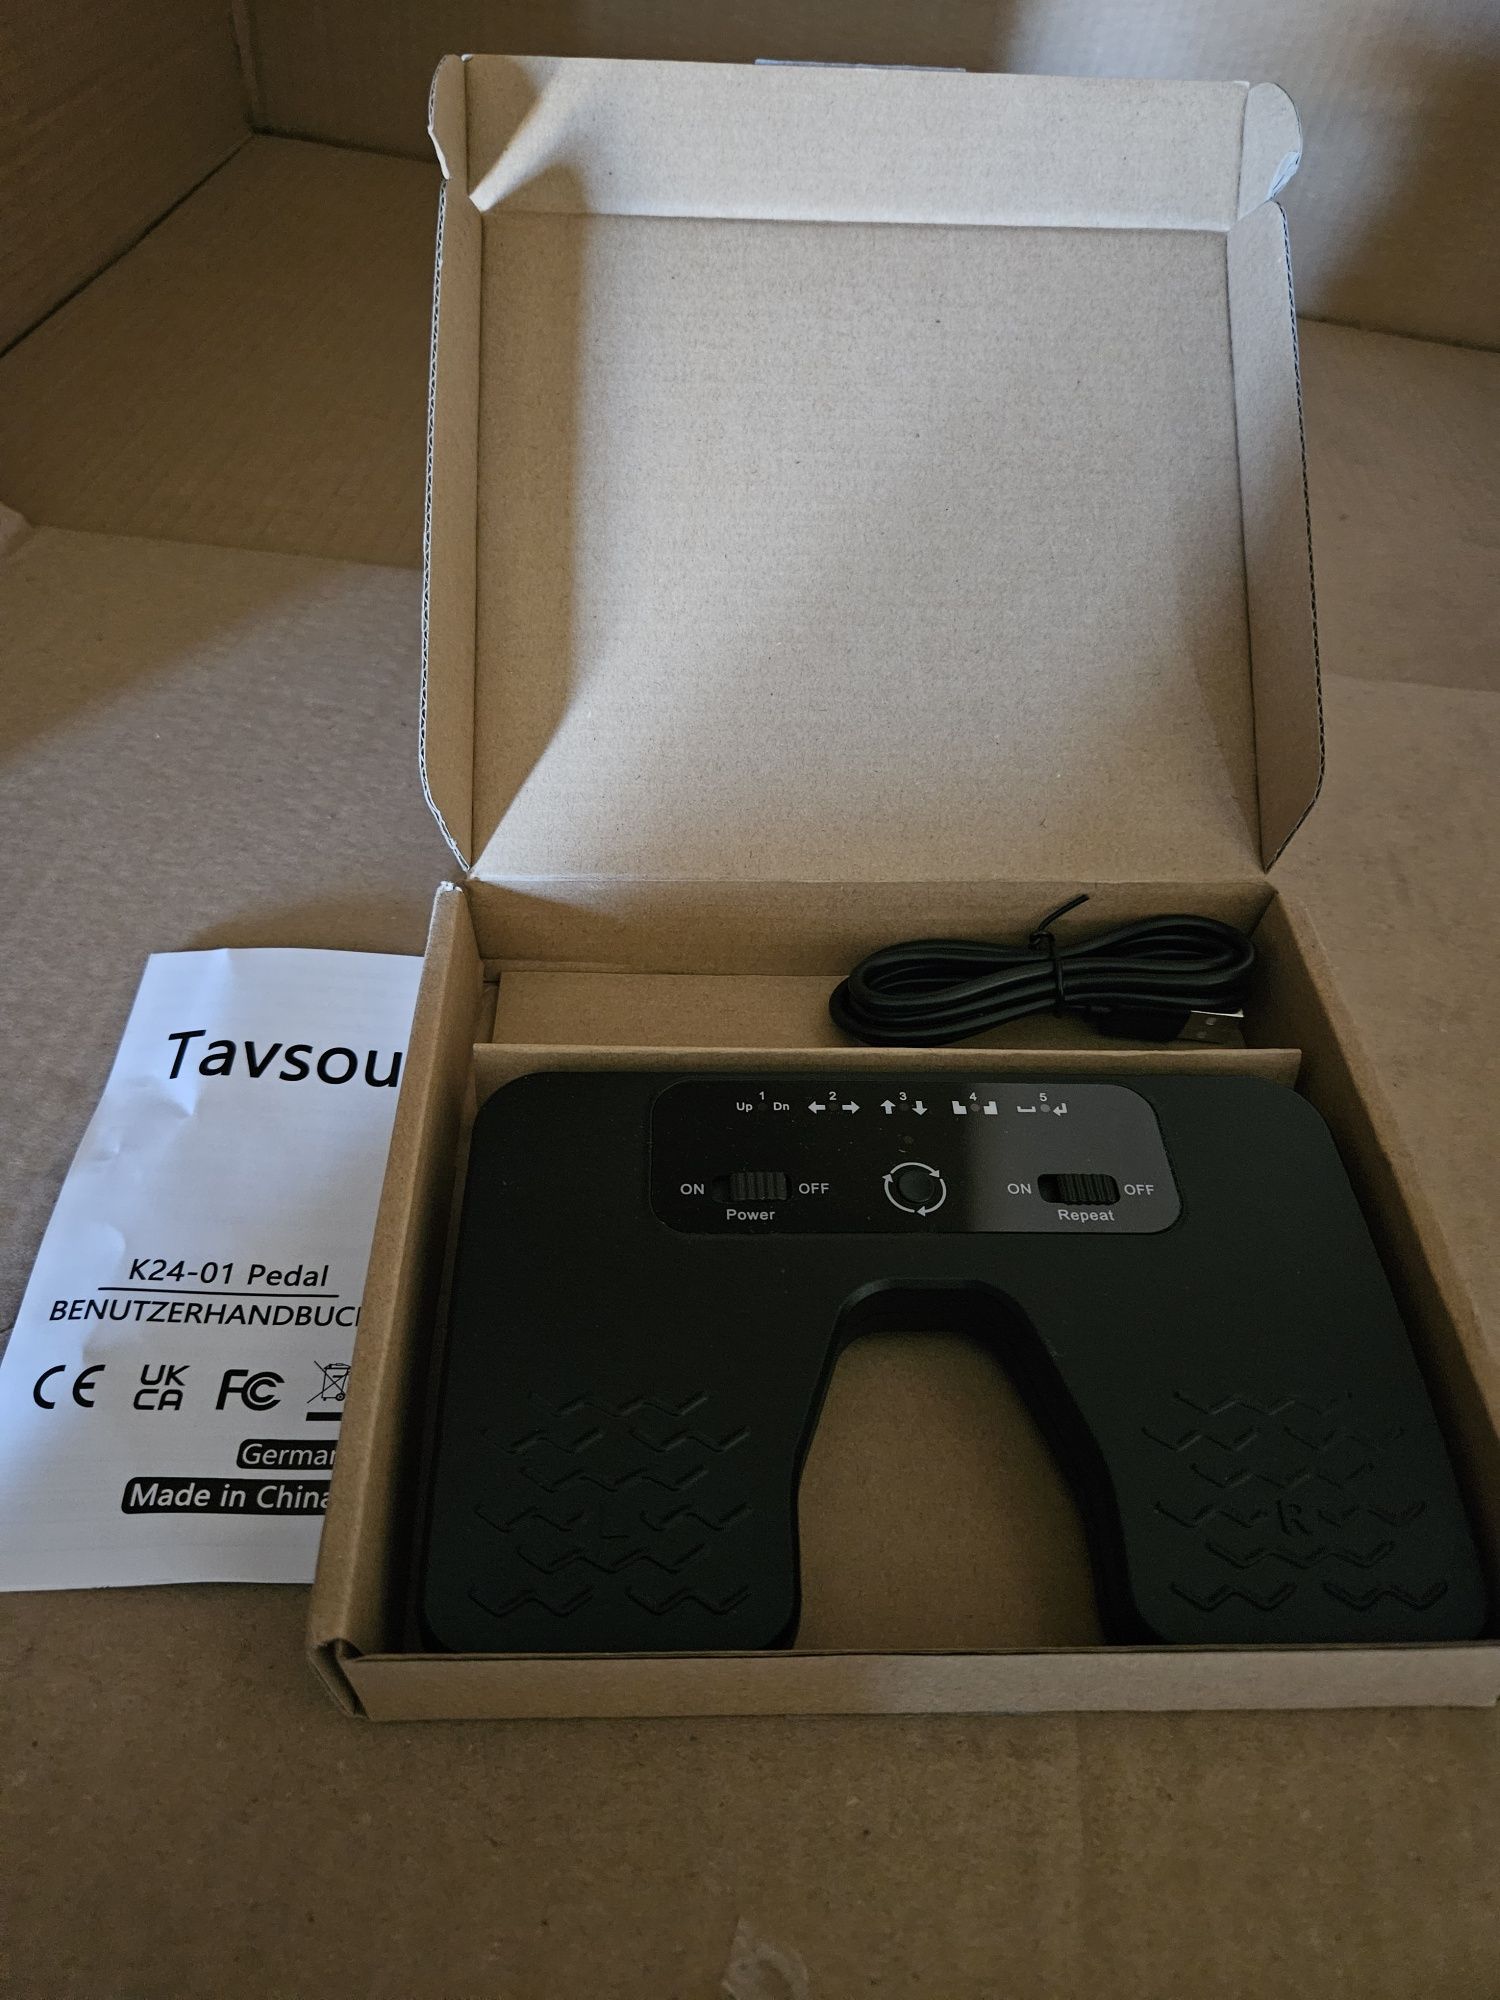 Tavsou Pedał Bluetooth Page Turner do tabletów